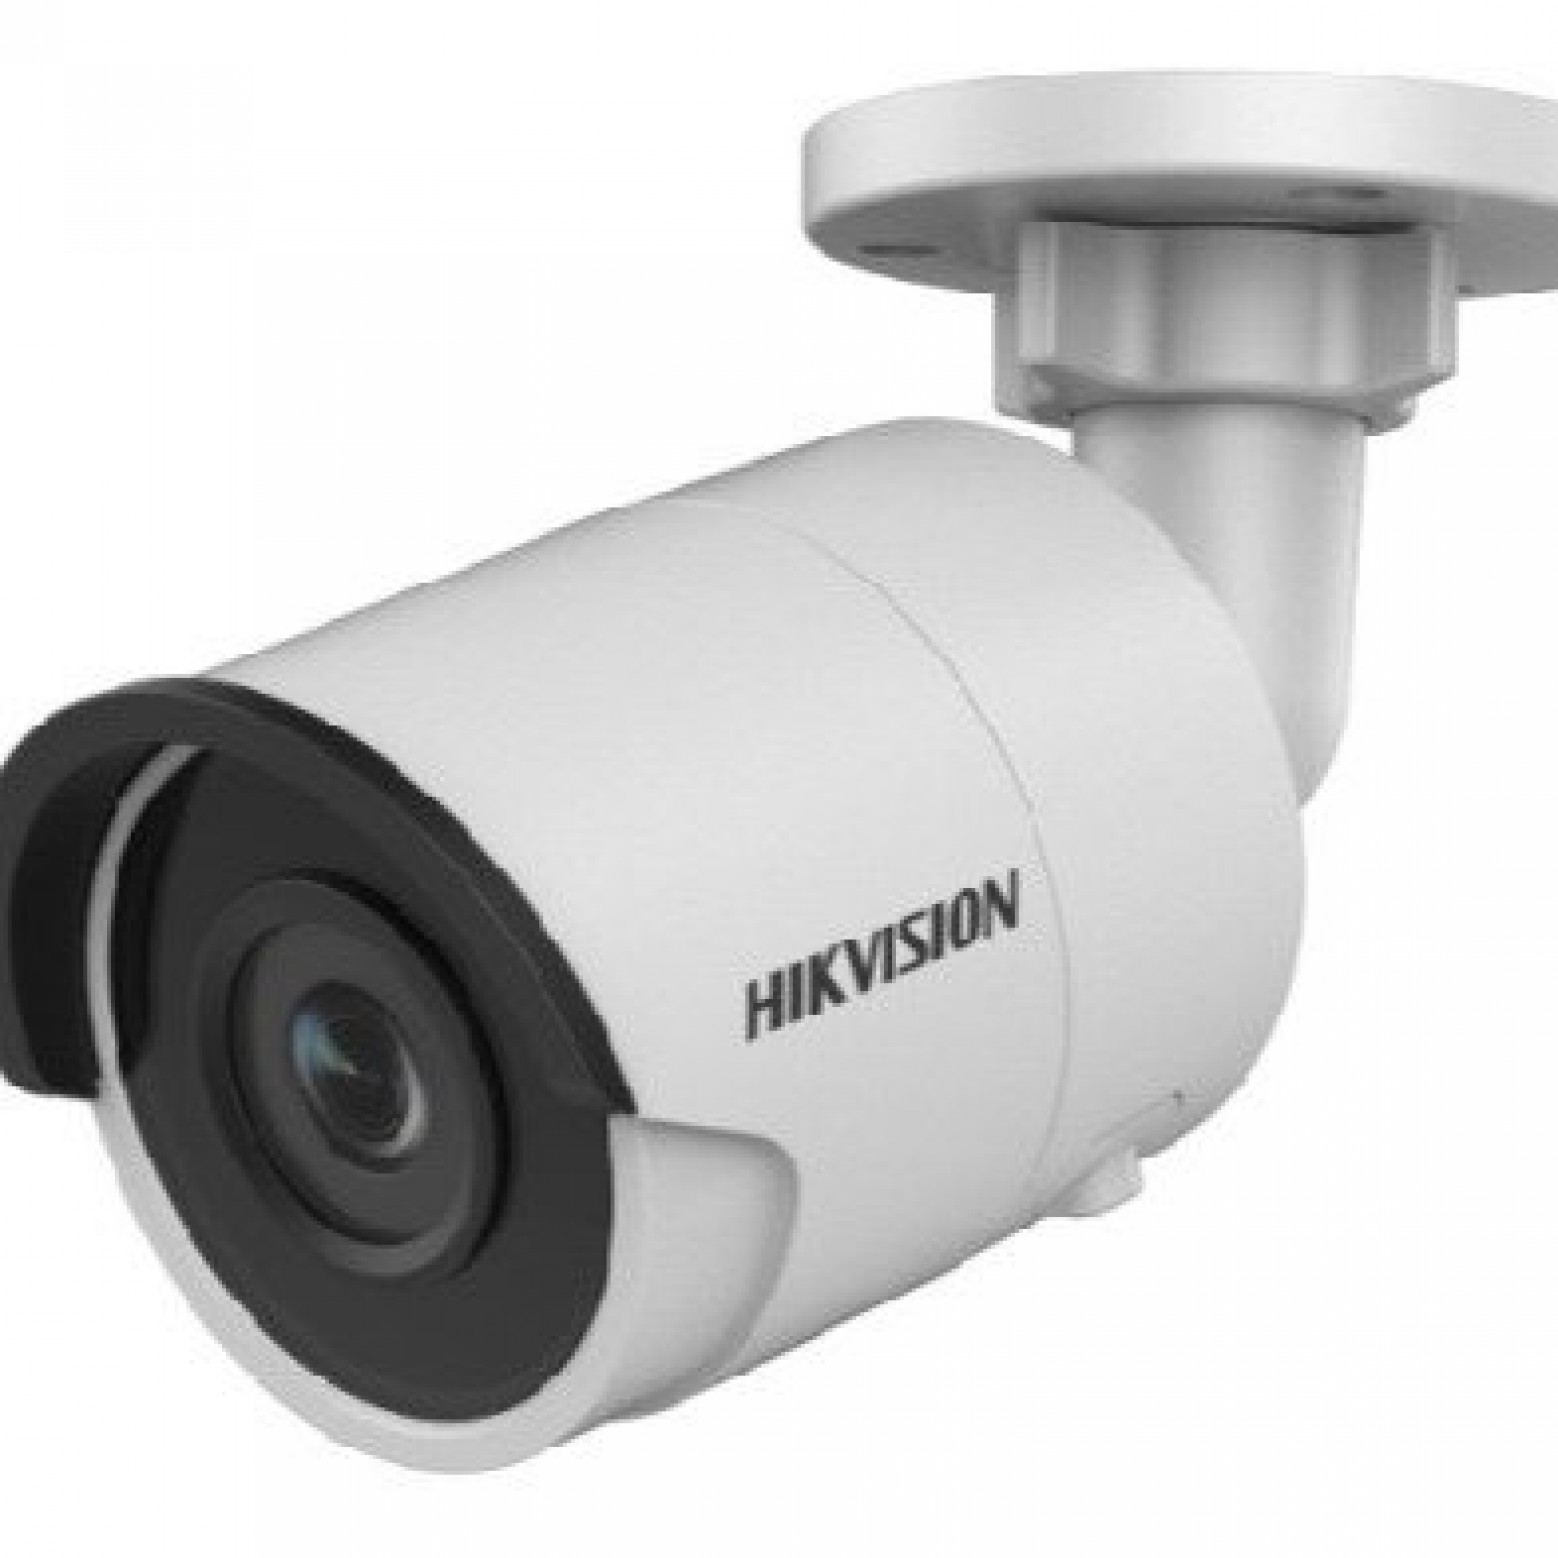 Hikvision DS-2CD2043G0-I Budgetlijn, Bullet Camera, 4MP, WDR, IR